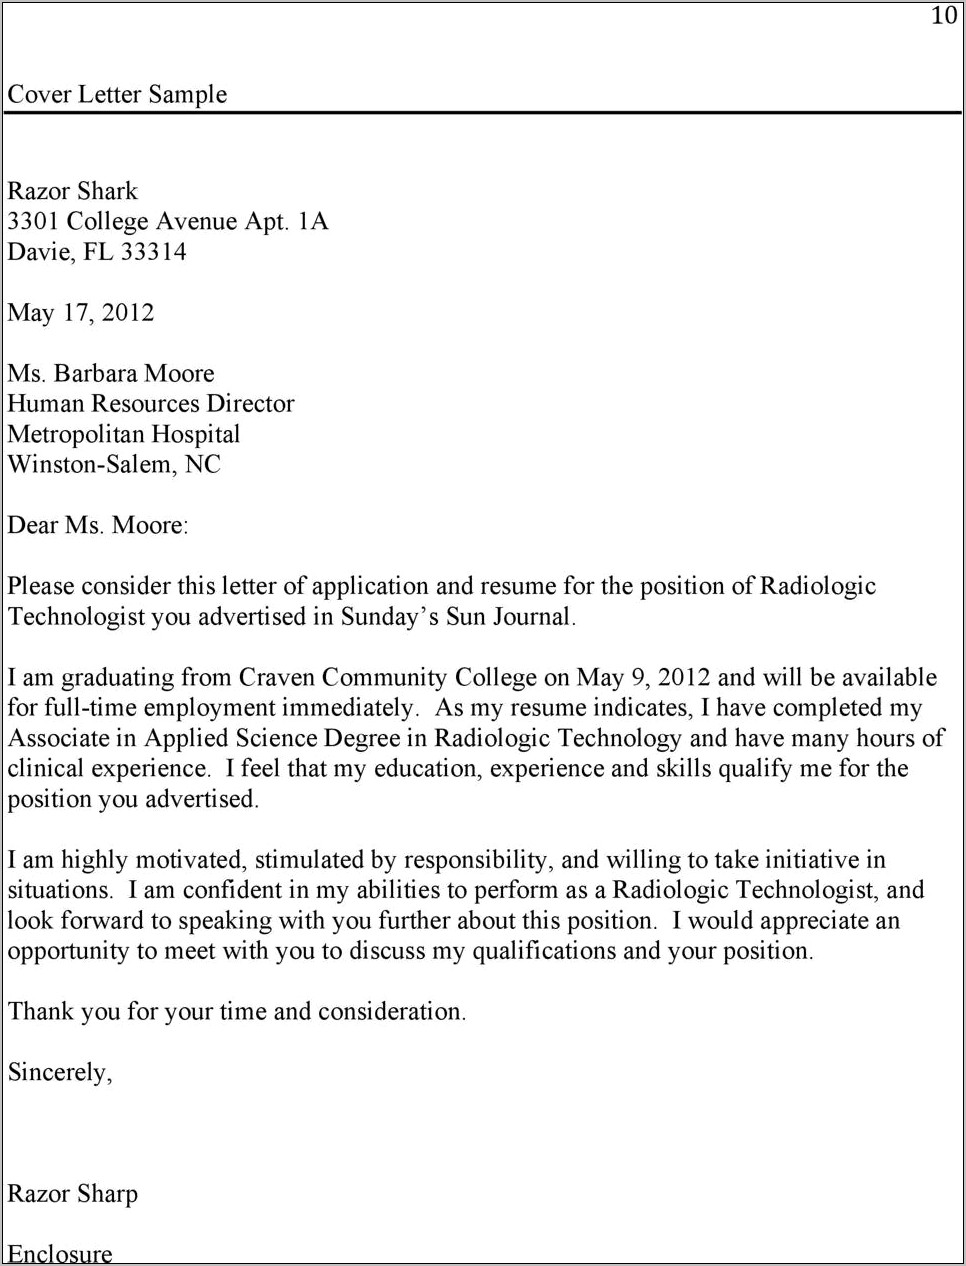 Radiologic Technologist Professional Resume Cover Letter